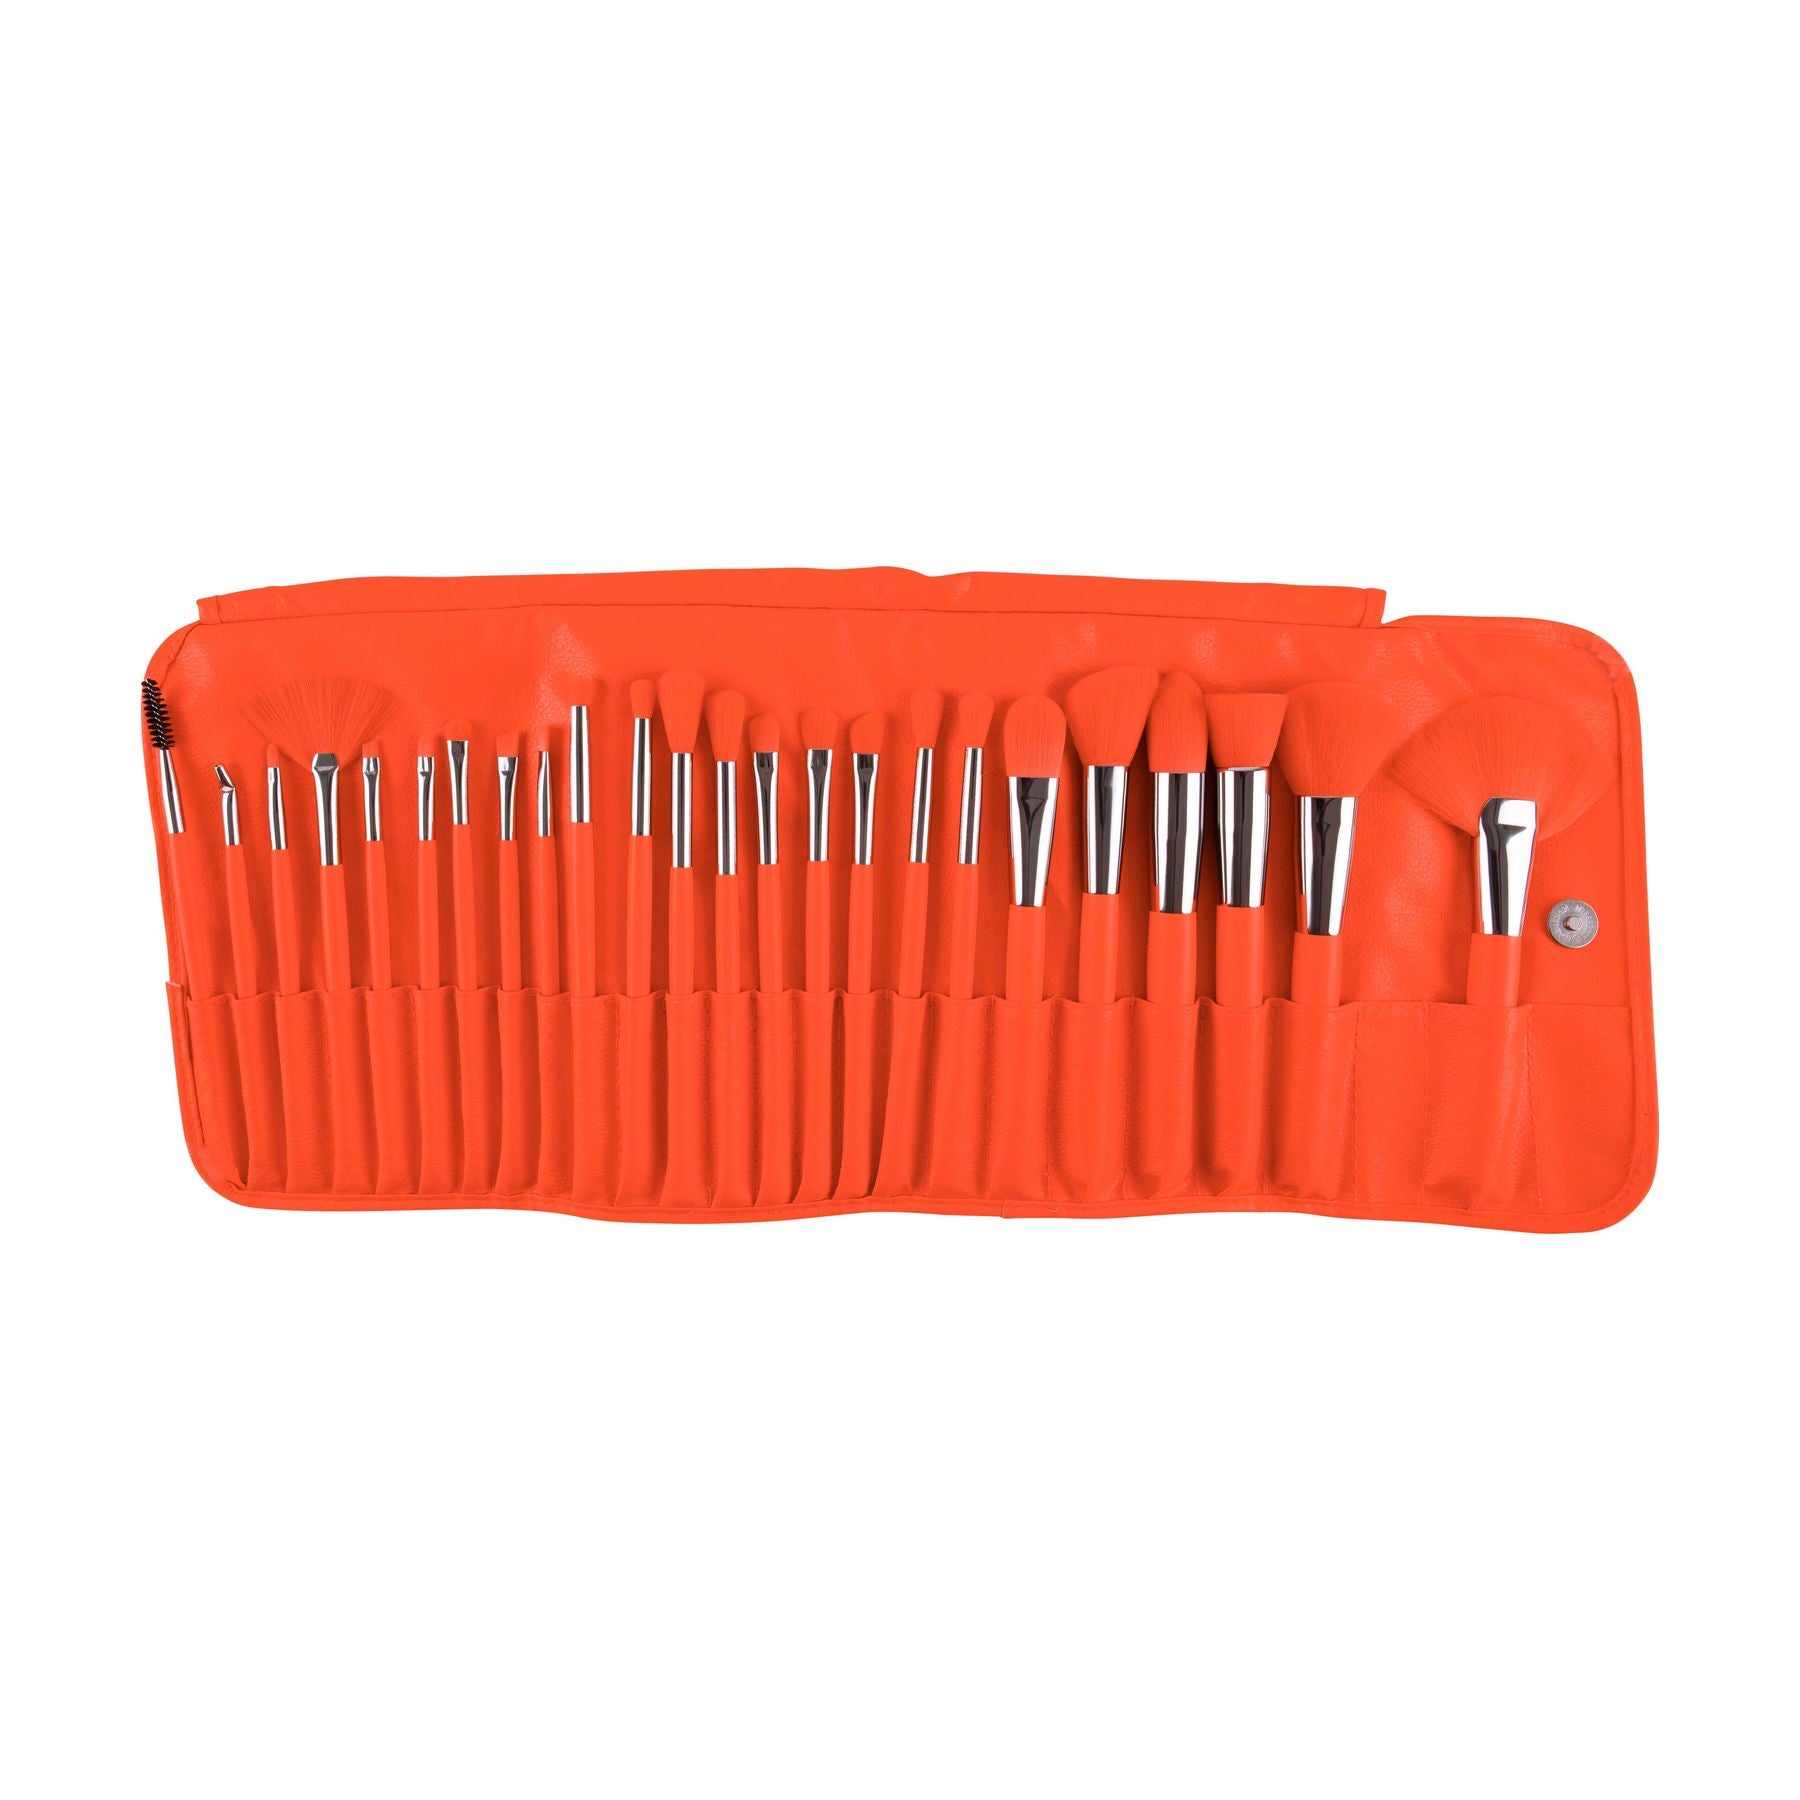 Beauty Creations - The Neon Orange 24pc Brush Set